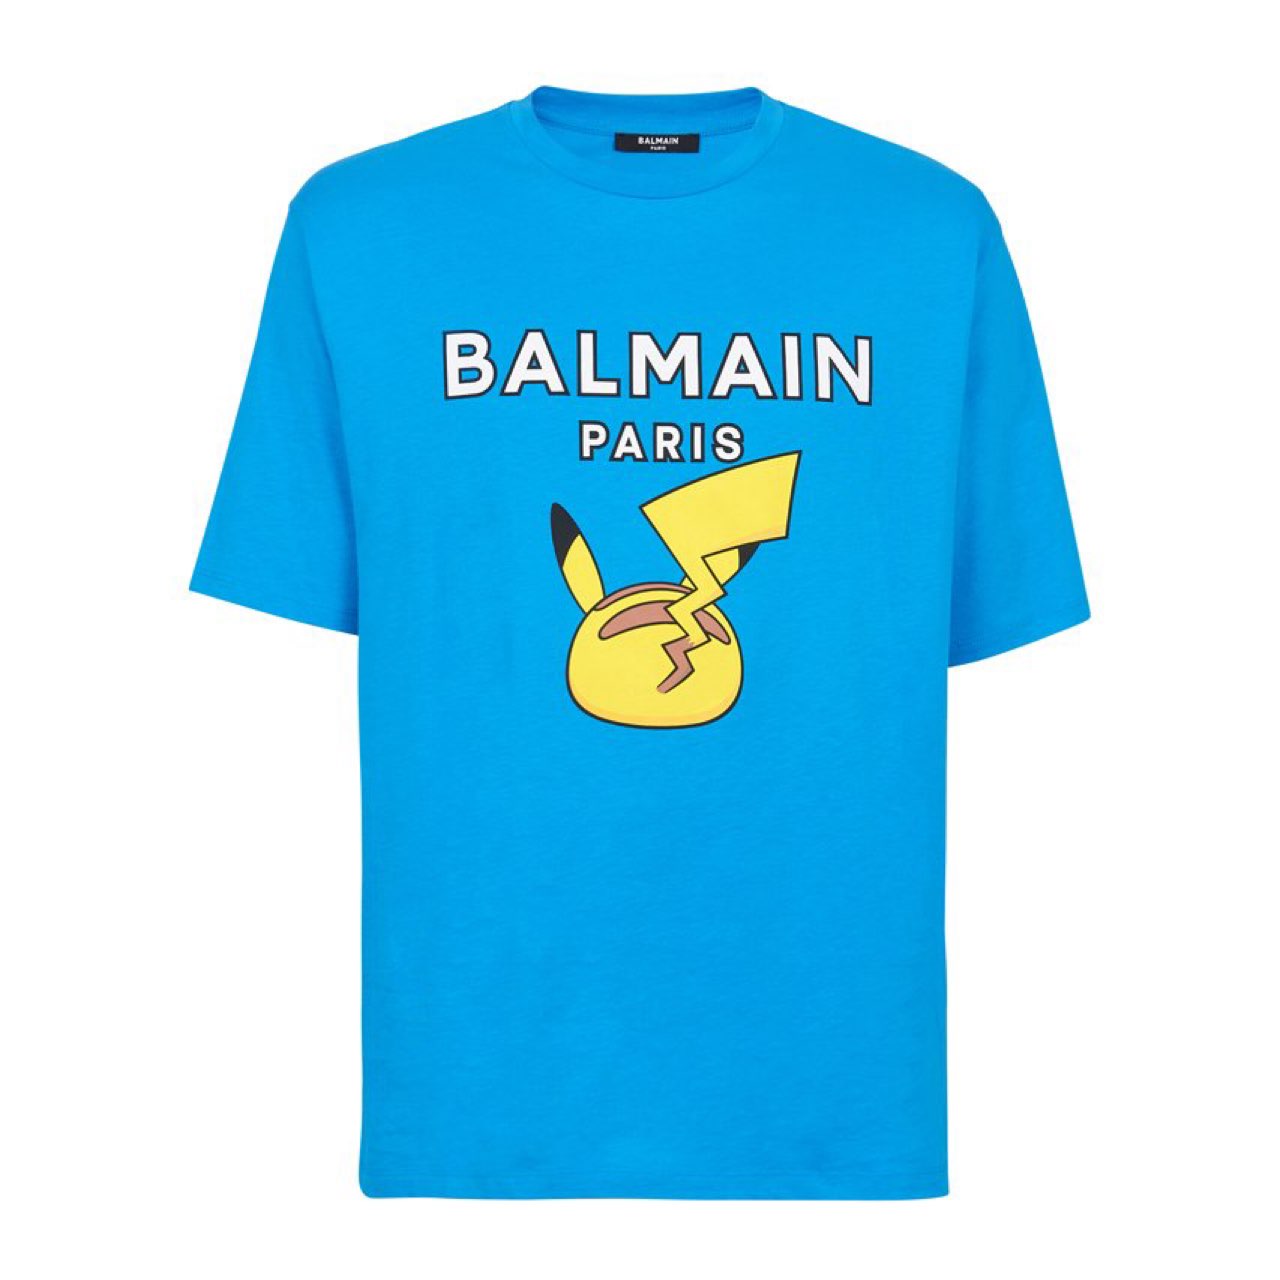 Balmain × Pokémon コラボコレクションが9月2日より発売 | UP TO DATE